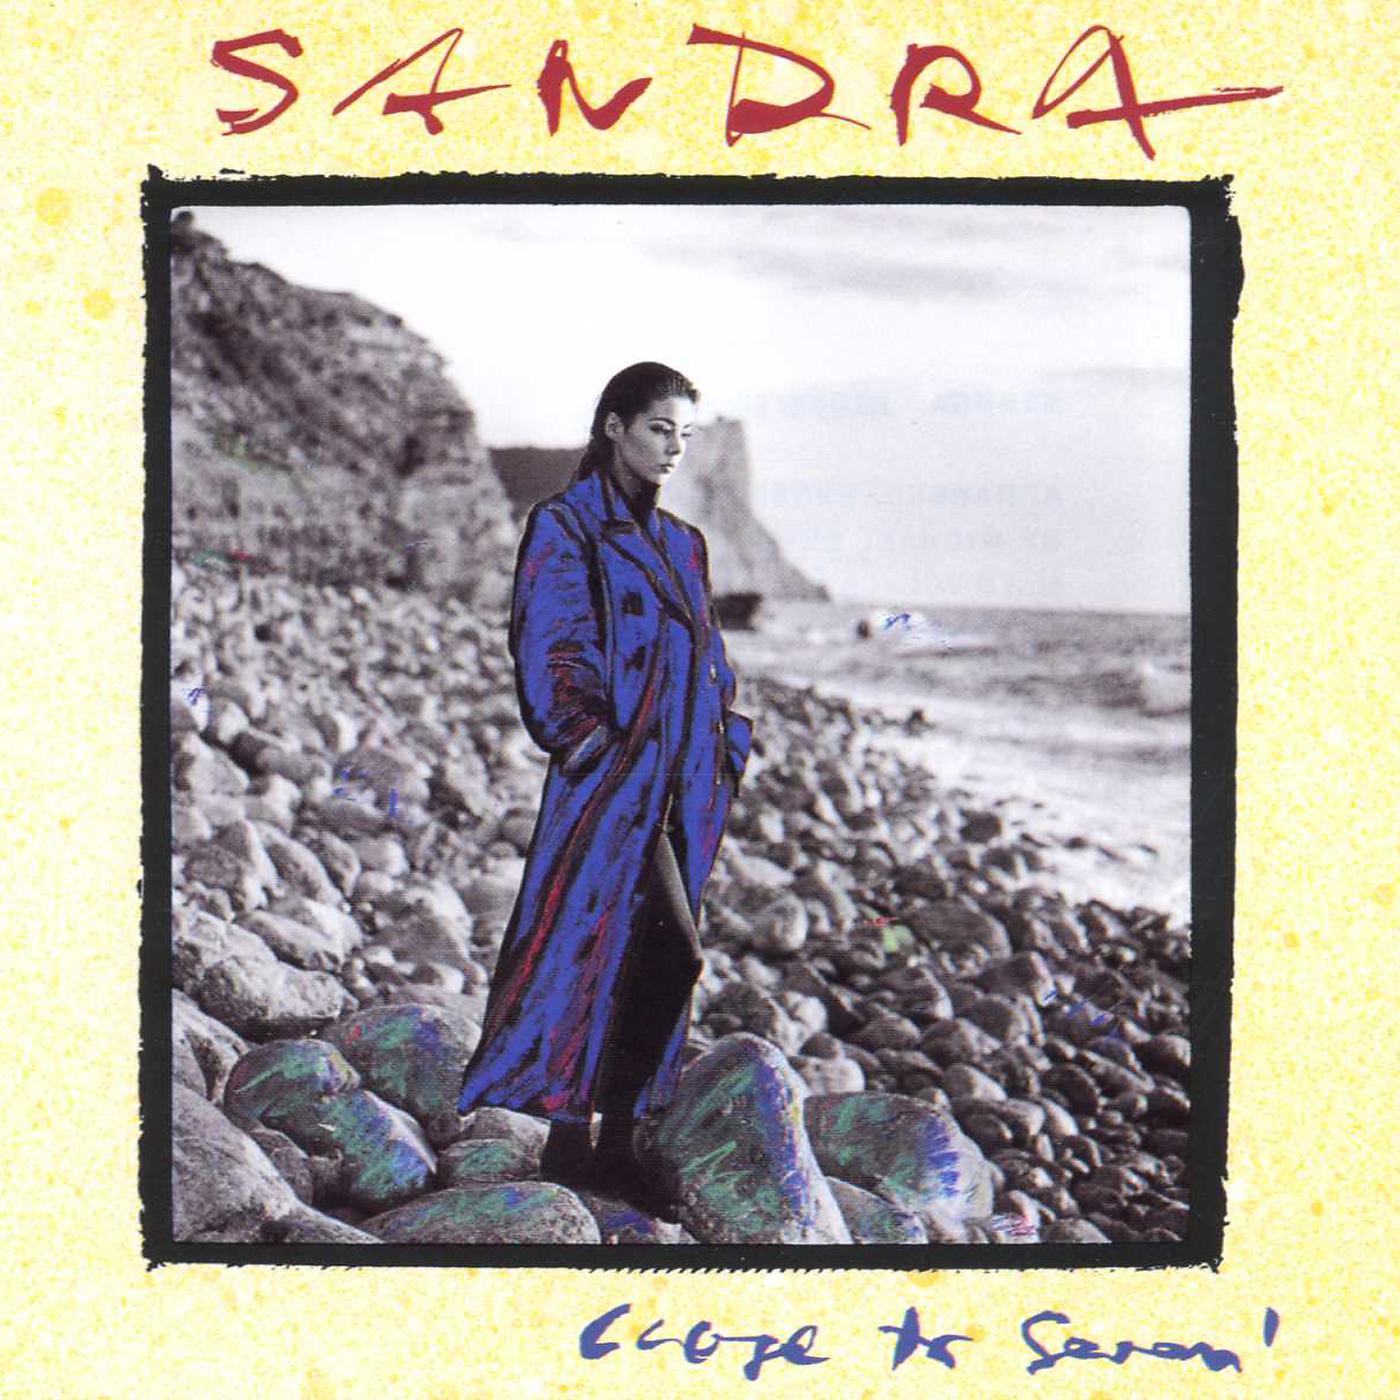 No taboo. Sandra close to Seven 1992. LP Sandra 1992. Sandra - close to Seven обложка.